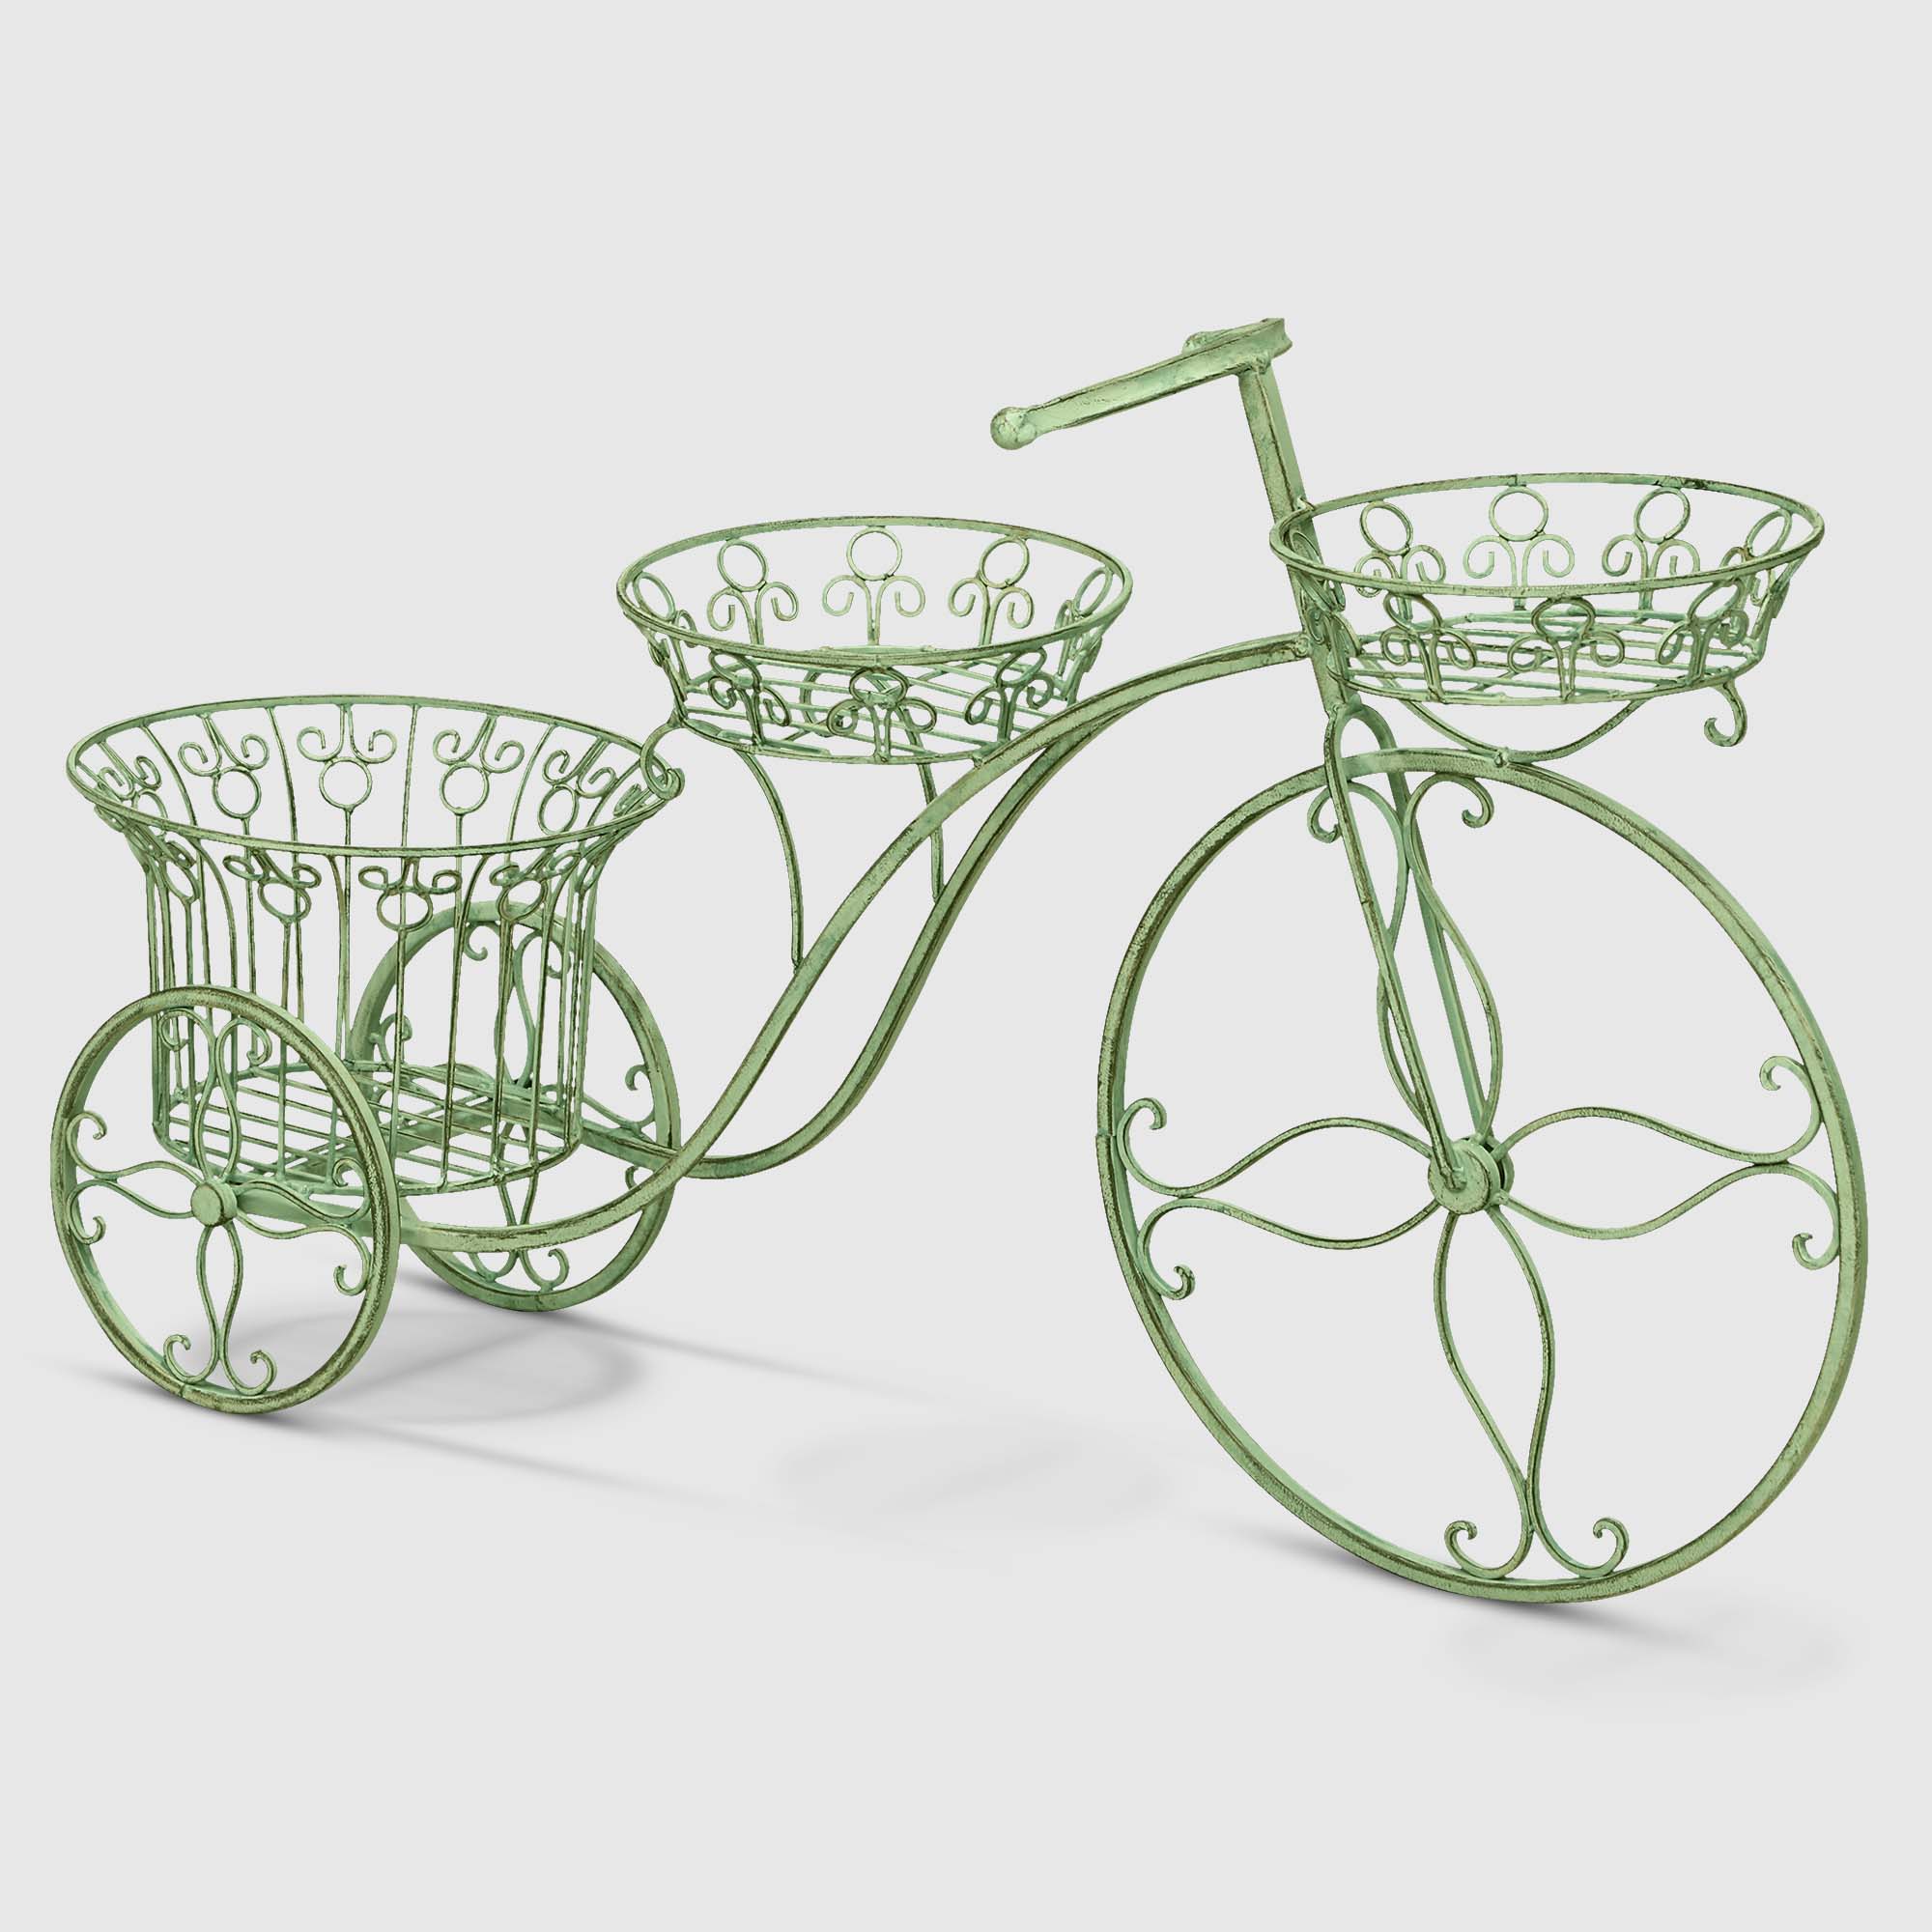 фото Подставка для цветов anxi jiacheng велосипед оливковый 95x53x27 см